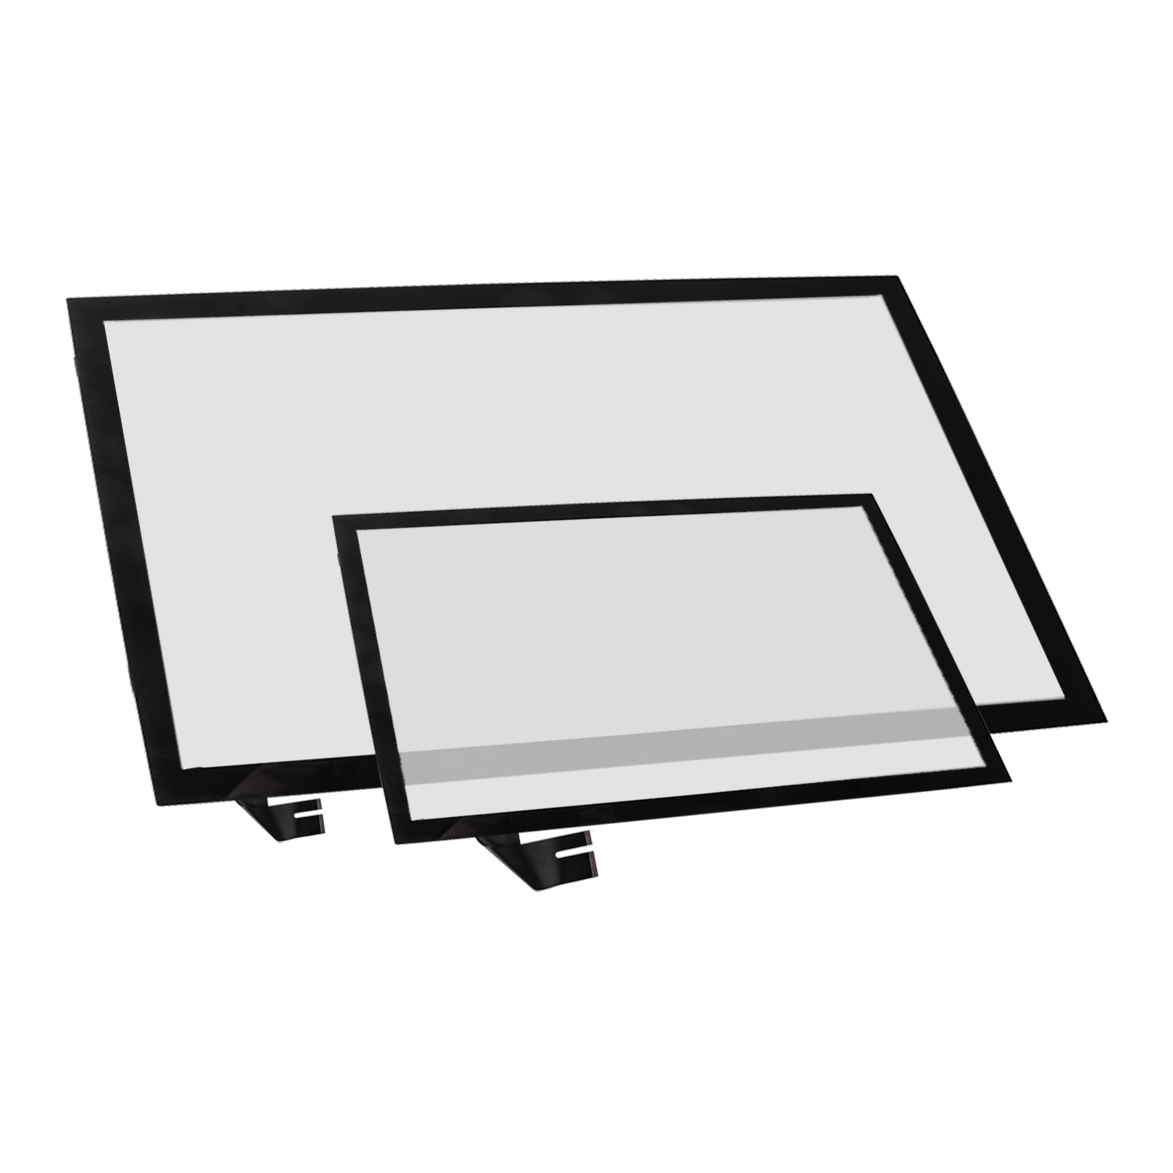 31.5 santimetatra PCAP Touch Panel